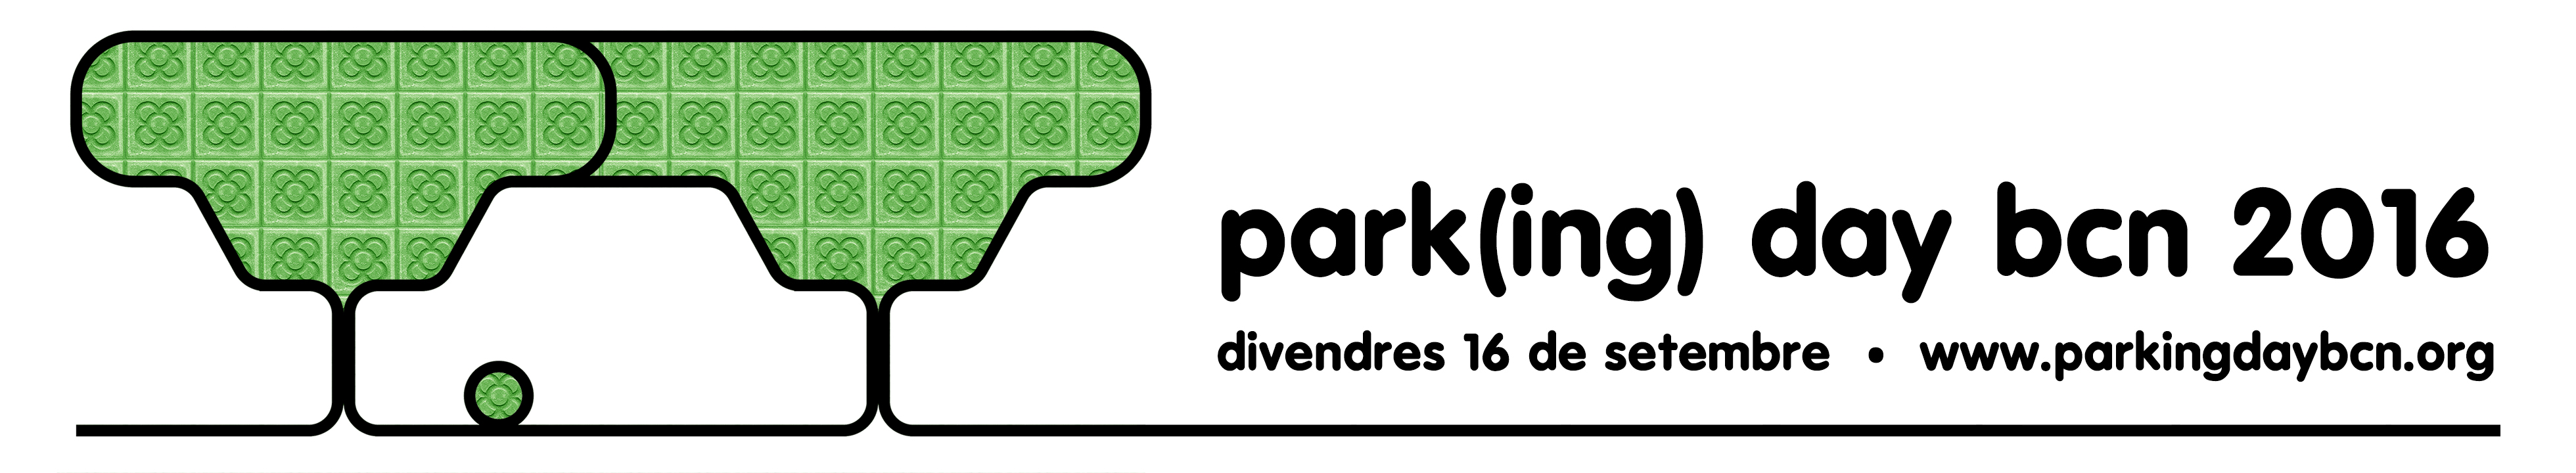 parkingdaybcn2016-banner392x72